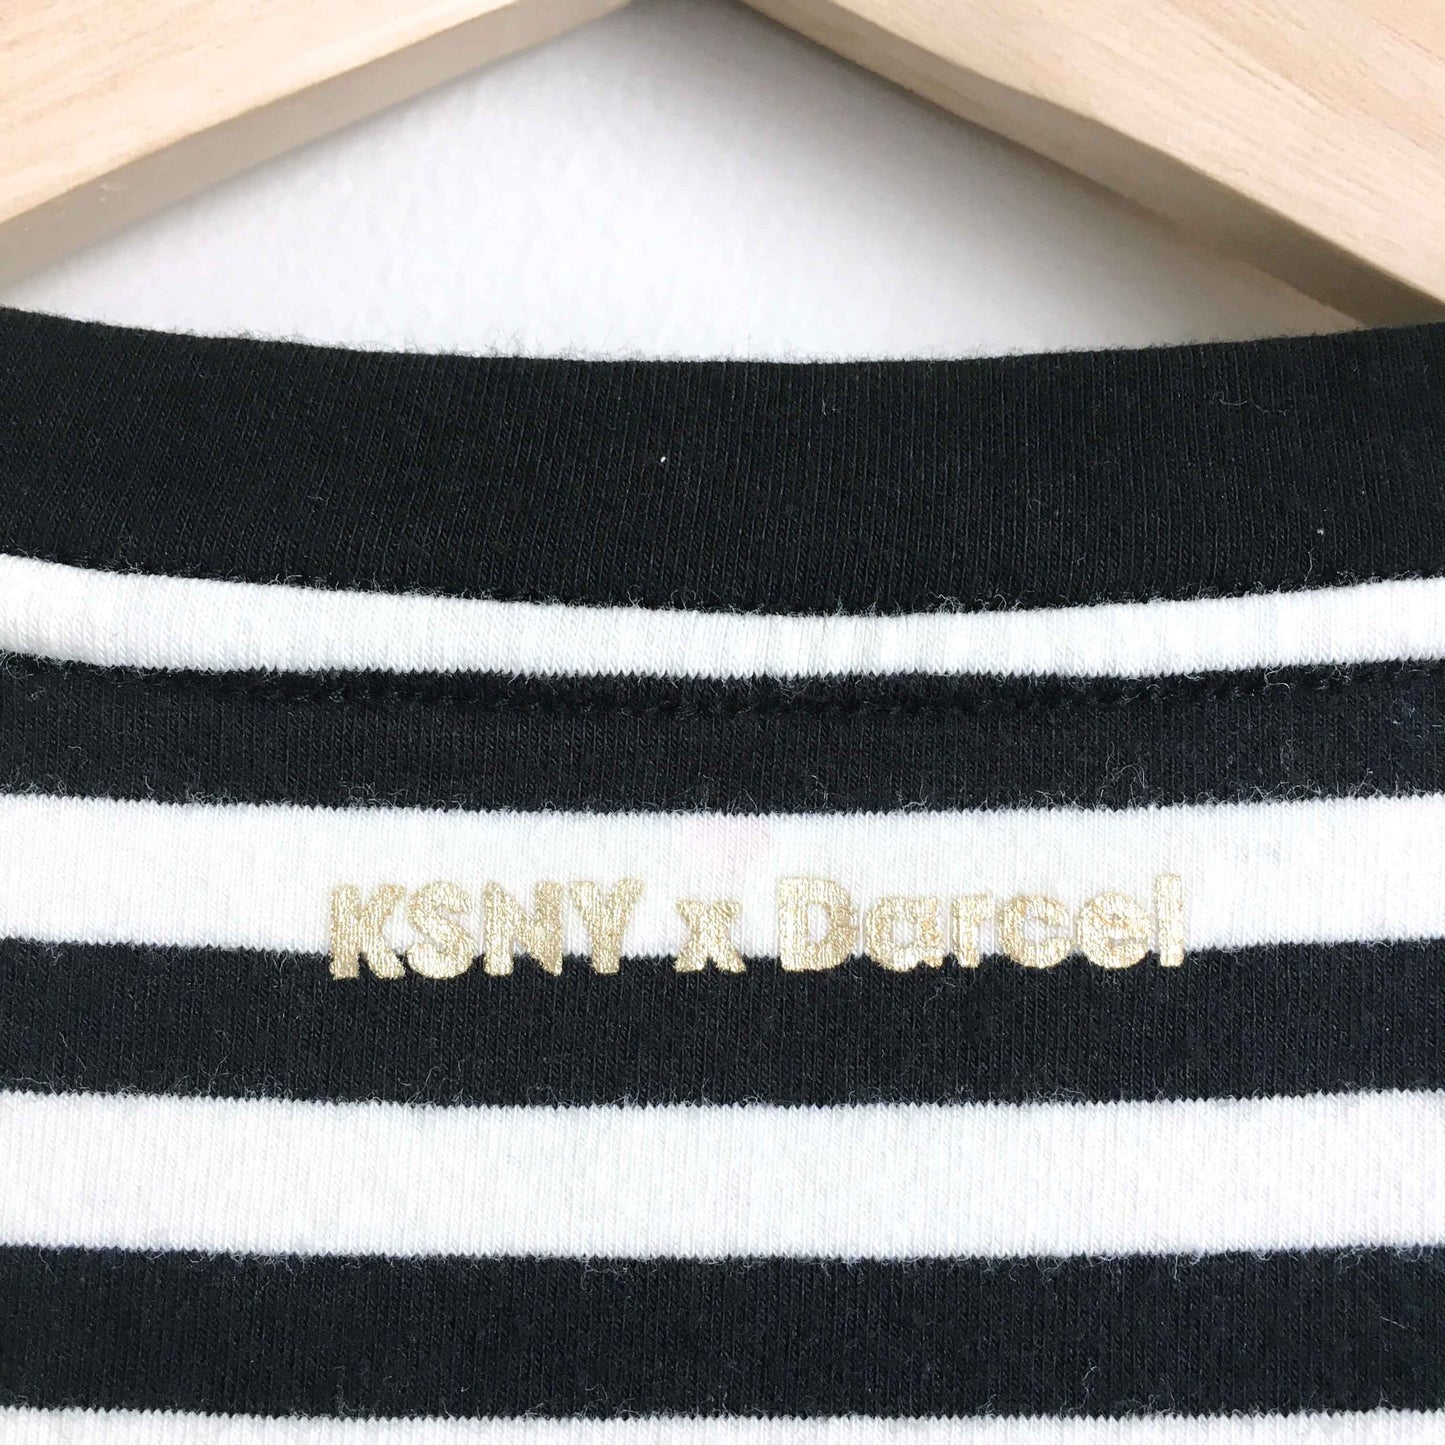 Kate Spade x Darcel Analiese striped top - size Large